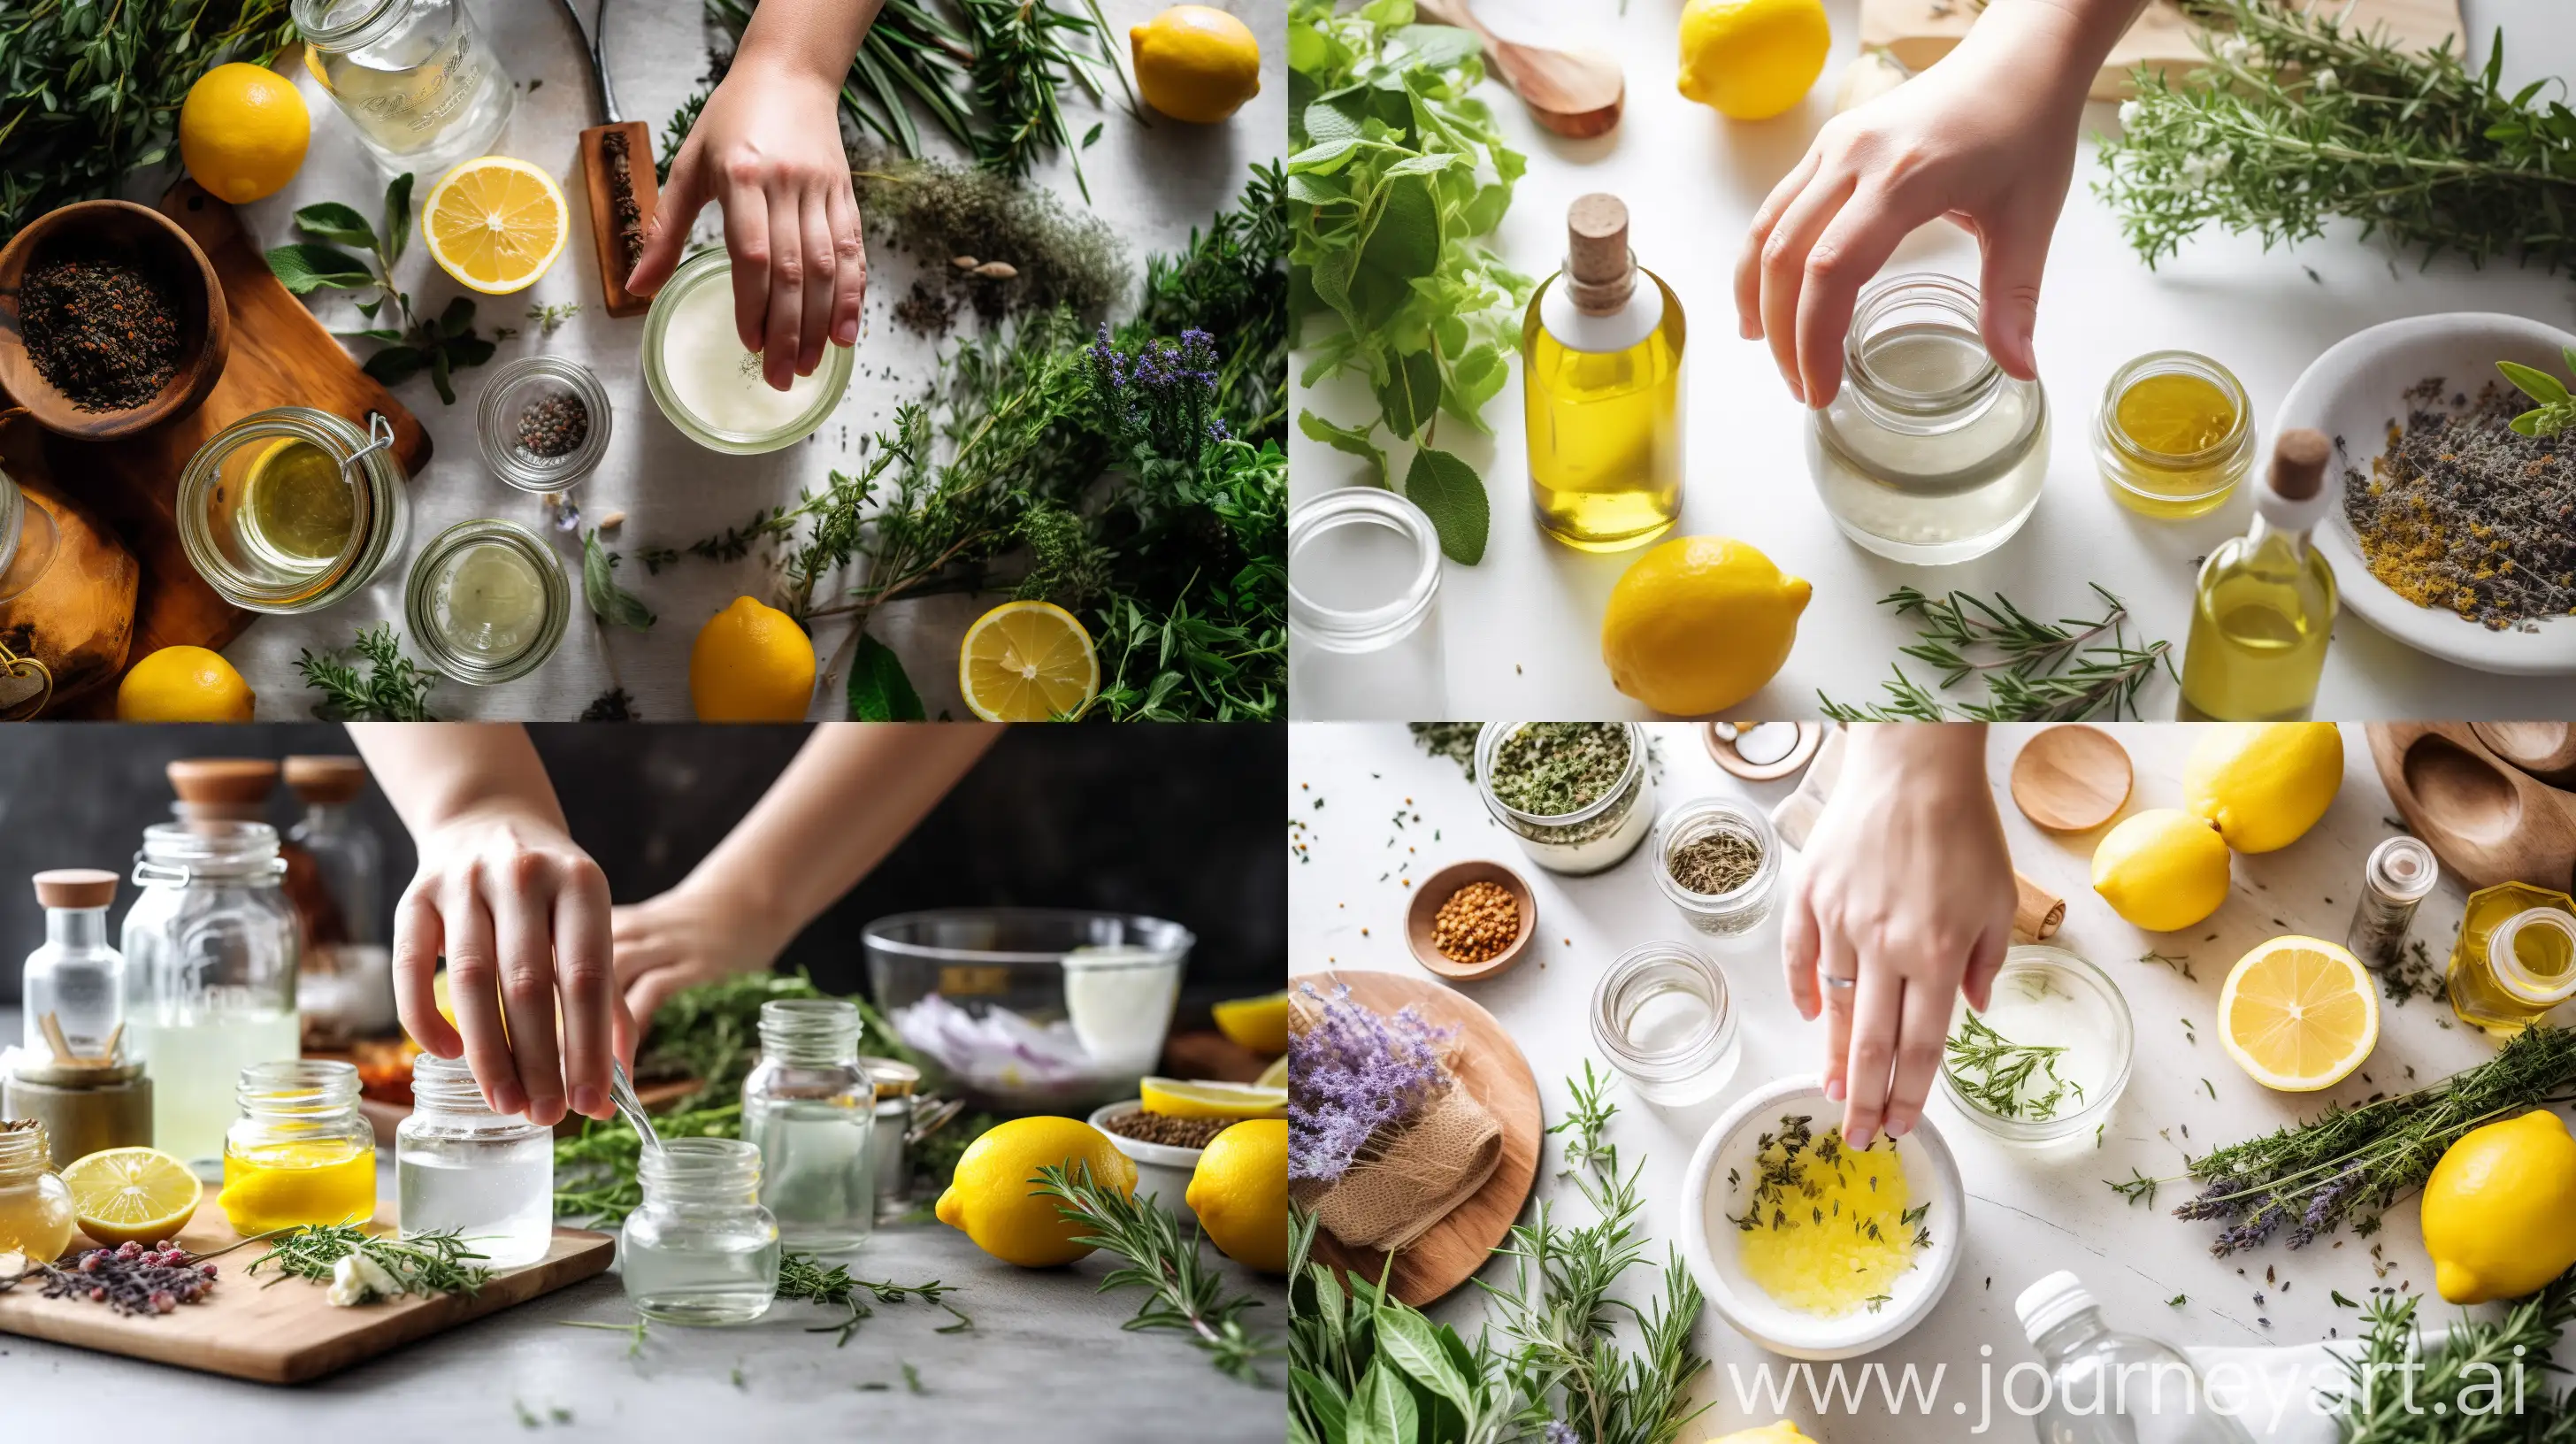 DIY-Natural-Cleaning-Products-Mixing-Lemon-Vinegar-and-Baking-Soda